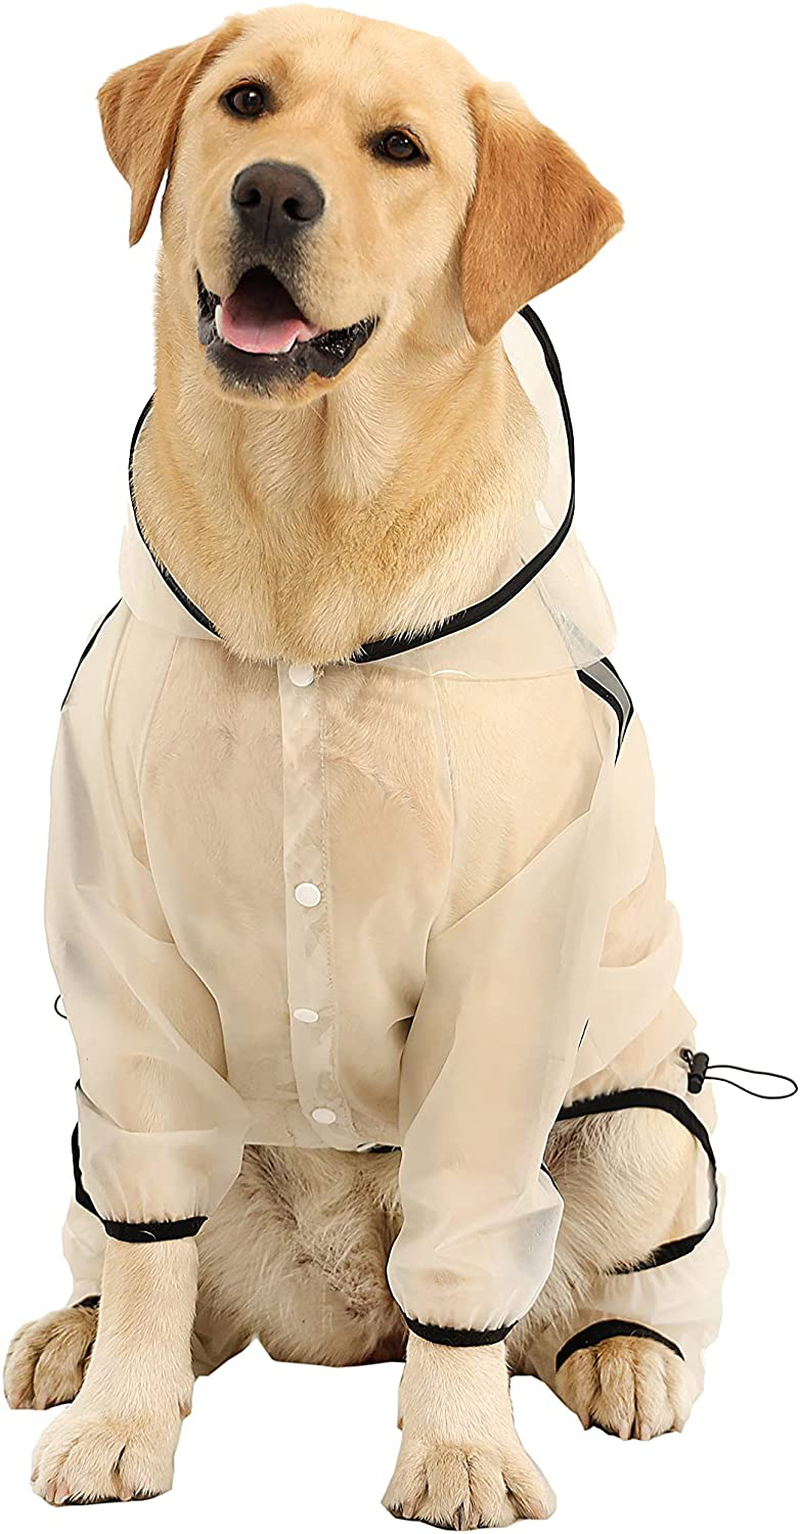 Olsa Dog Raincoat, Dog Hooded Slicker Poncho, 4 Legs Dog Rain Jacket with Reflective Stripe, Transparent Water Proof Resistant Dog Rain Snow Clothes for Small Medium Large Dogs